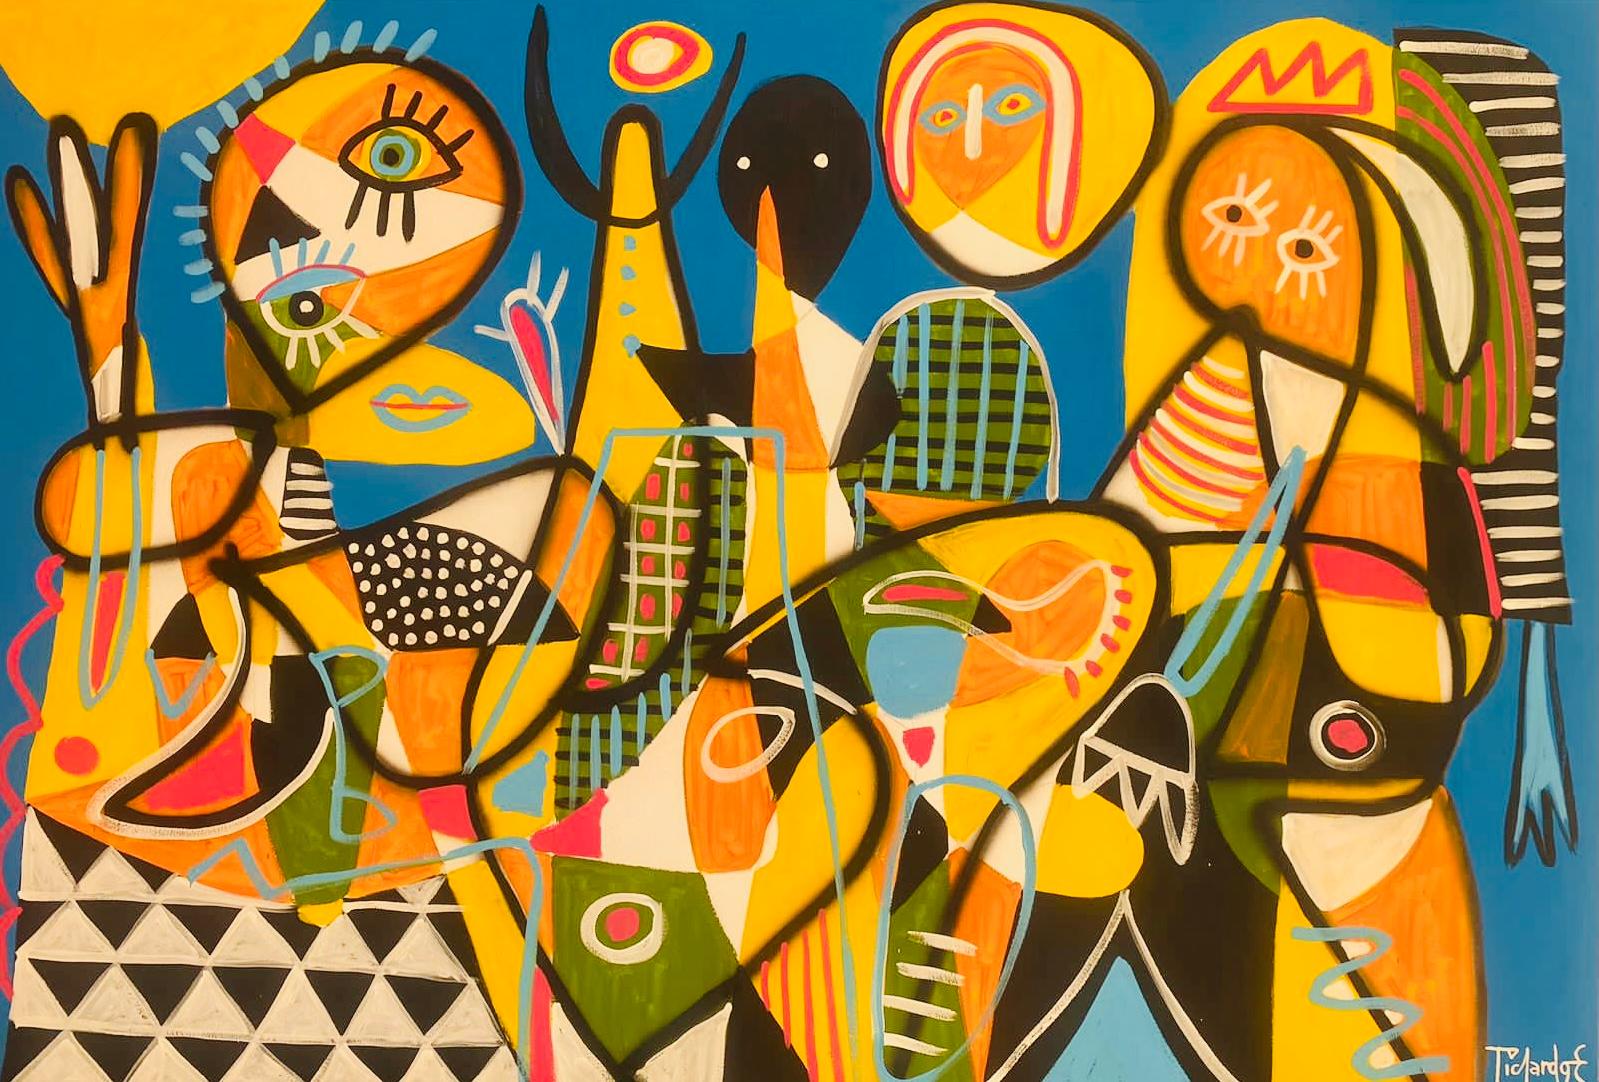 Contemporary Art, Abstract Painting
Acrylic on canvas
130x190cm
Signed 




About the artist
Enrique Pichardo (Mexico City, 1973) graduated from Escuela Nacional de Pintura, Escultura y Grabado (ENPEG) “La Esmeralda”. As a Mexican Contemporary